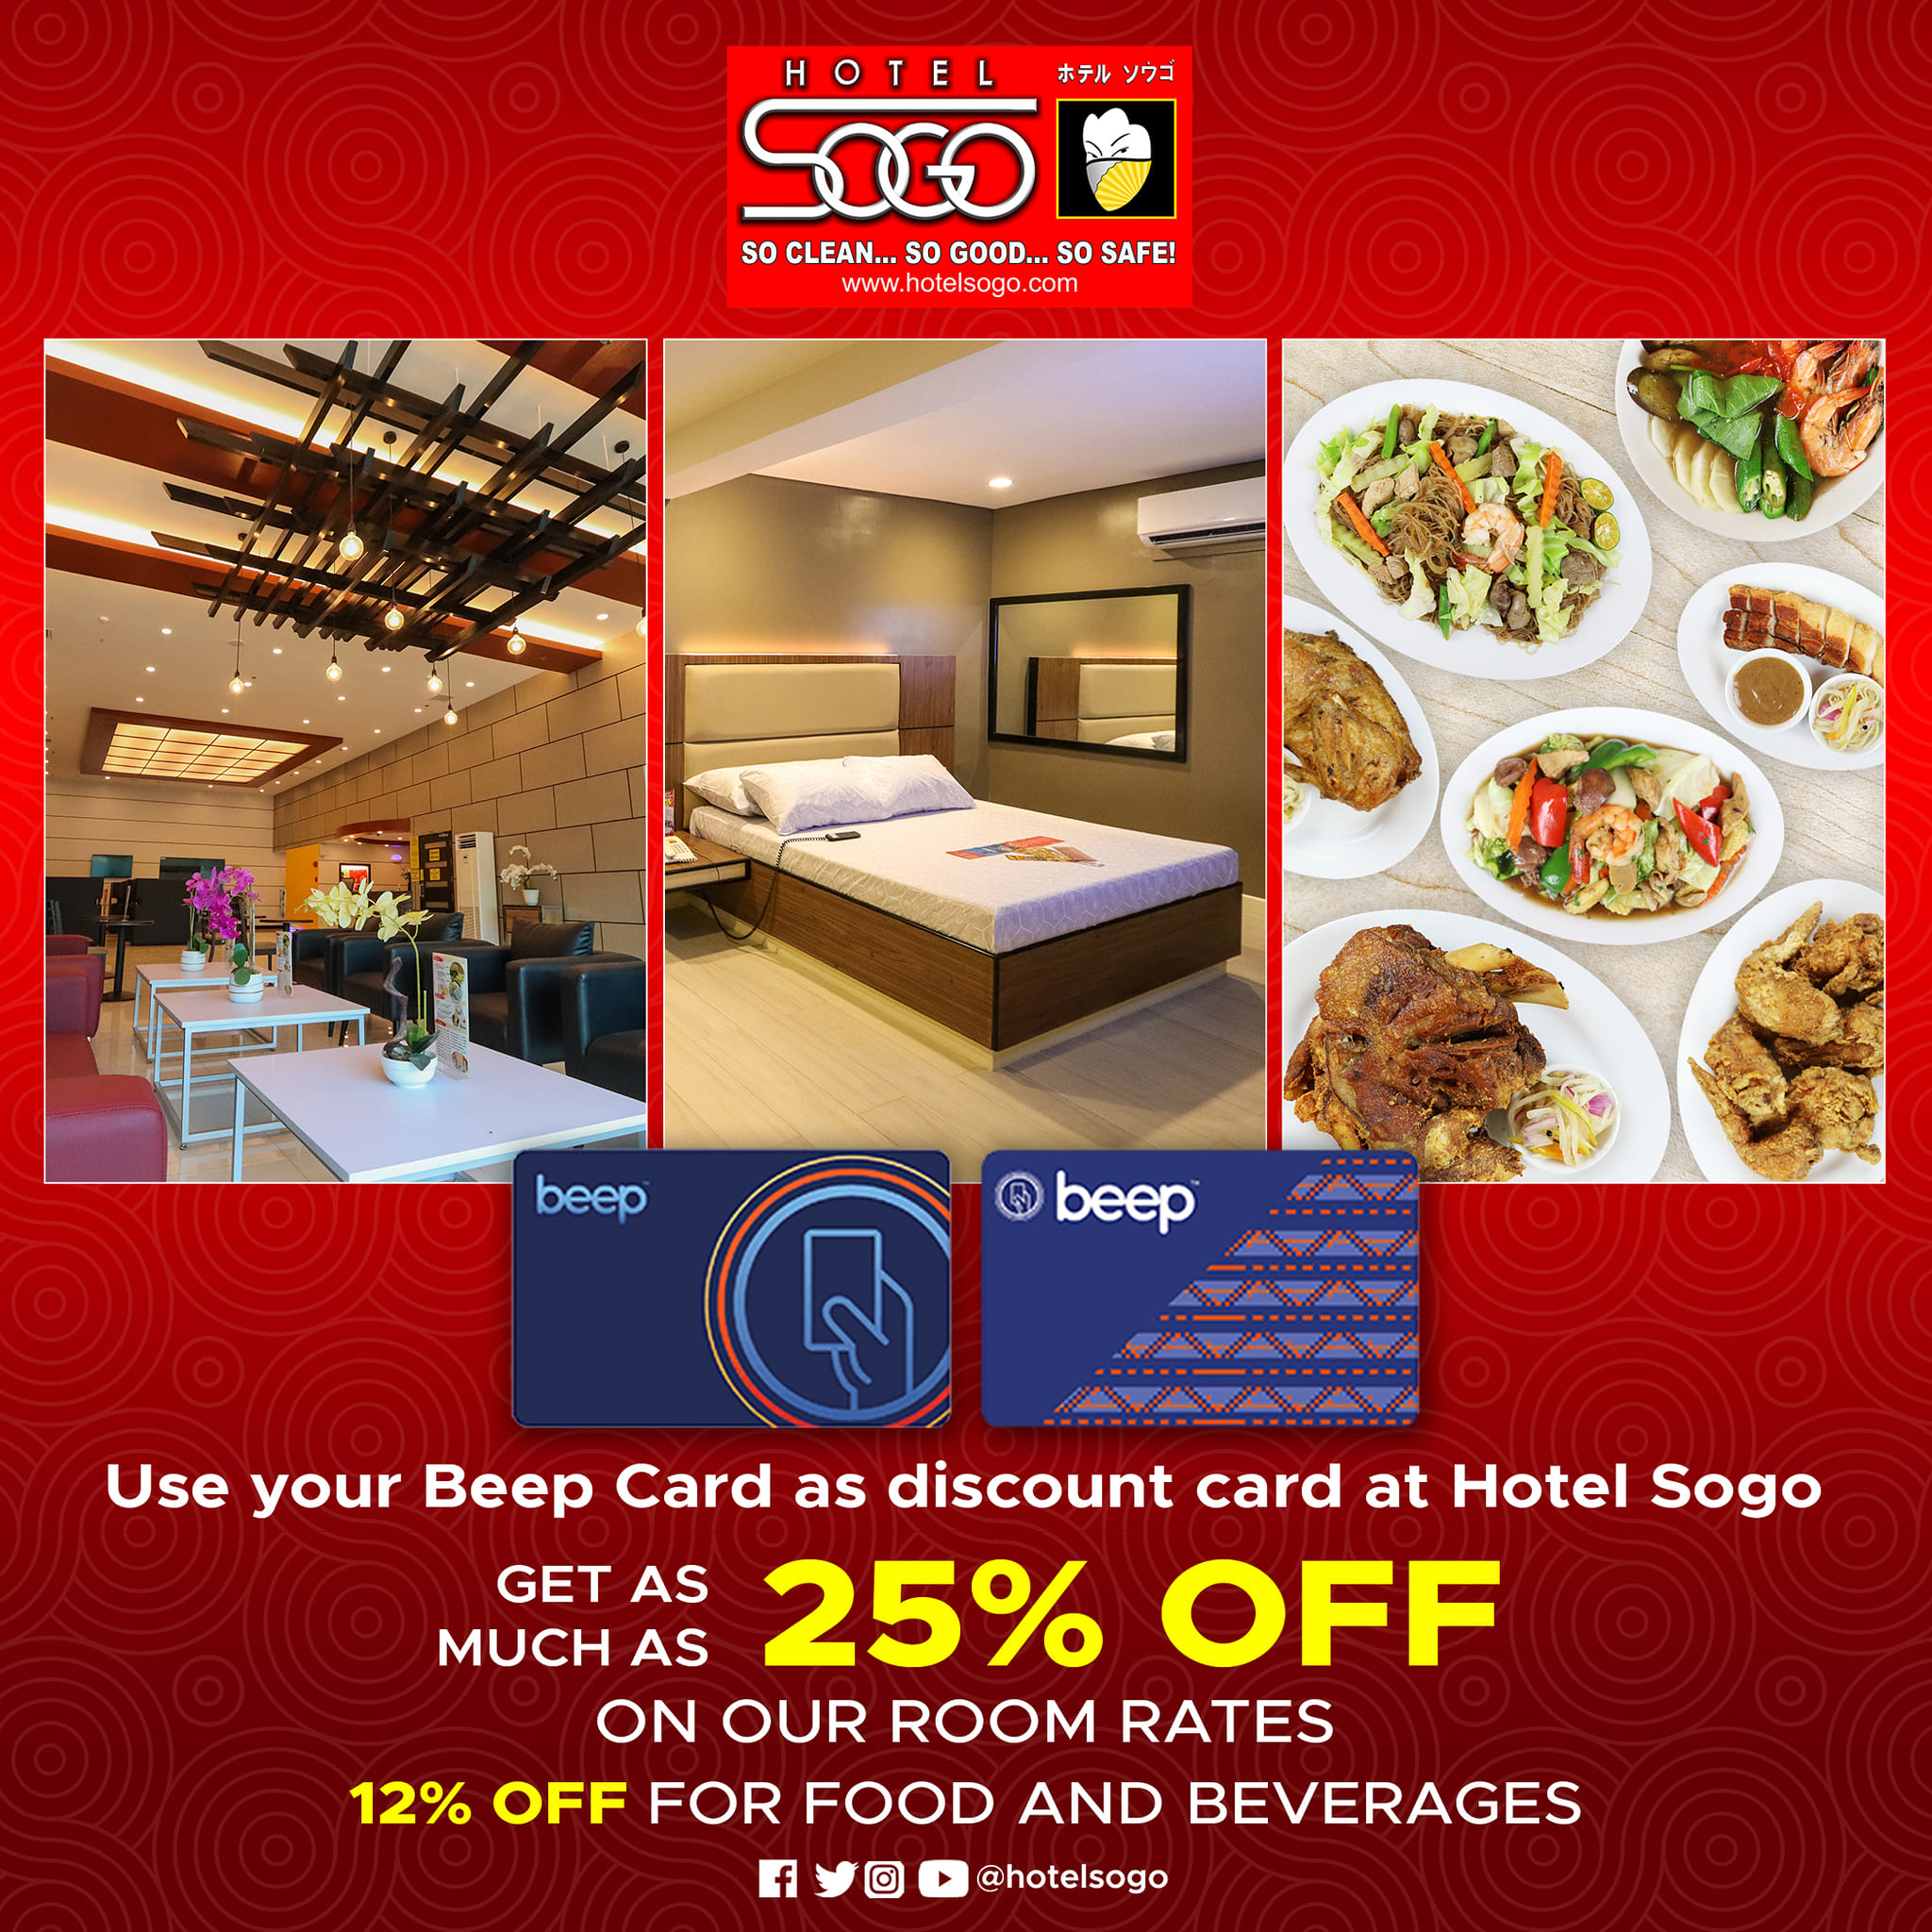 where to buy beep card - beep card discount at hotel sogo